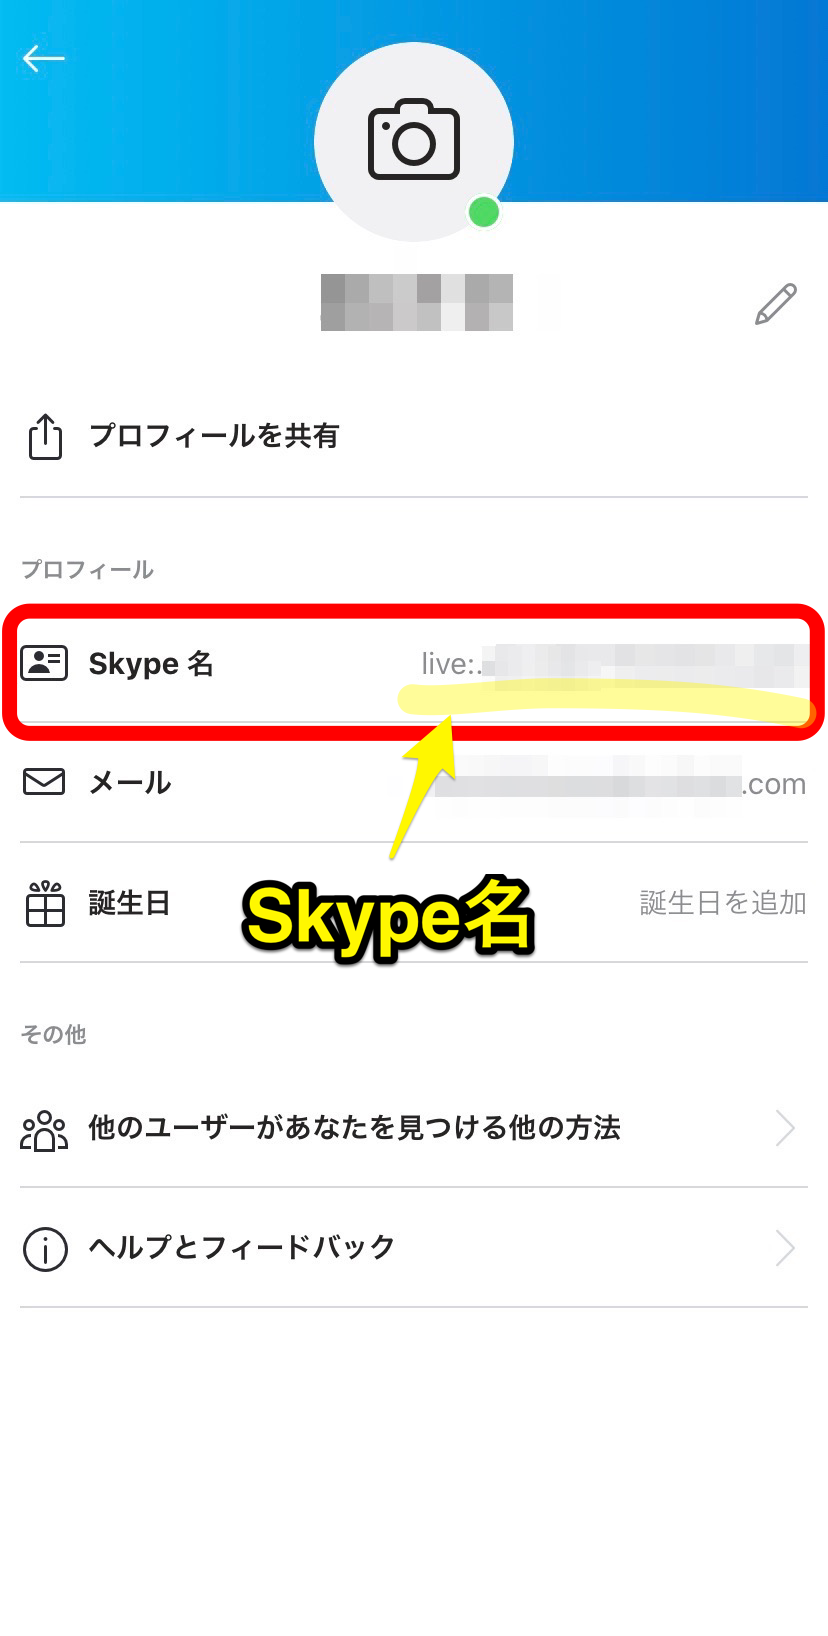 Skype Skype表示名を変更したい 方法や注意点を解説 Apptopi